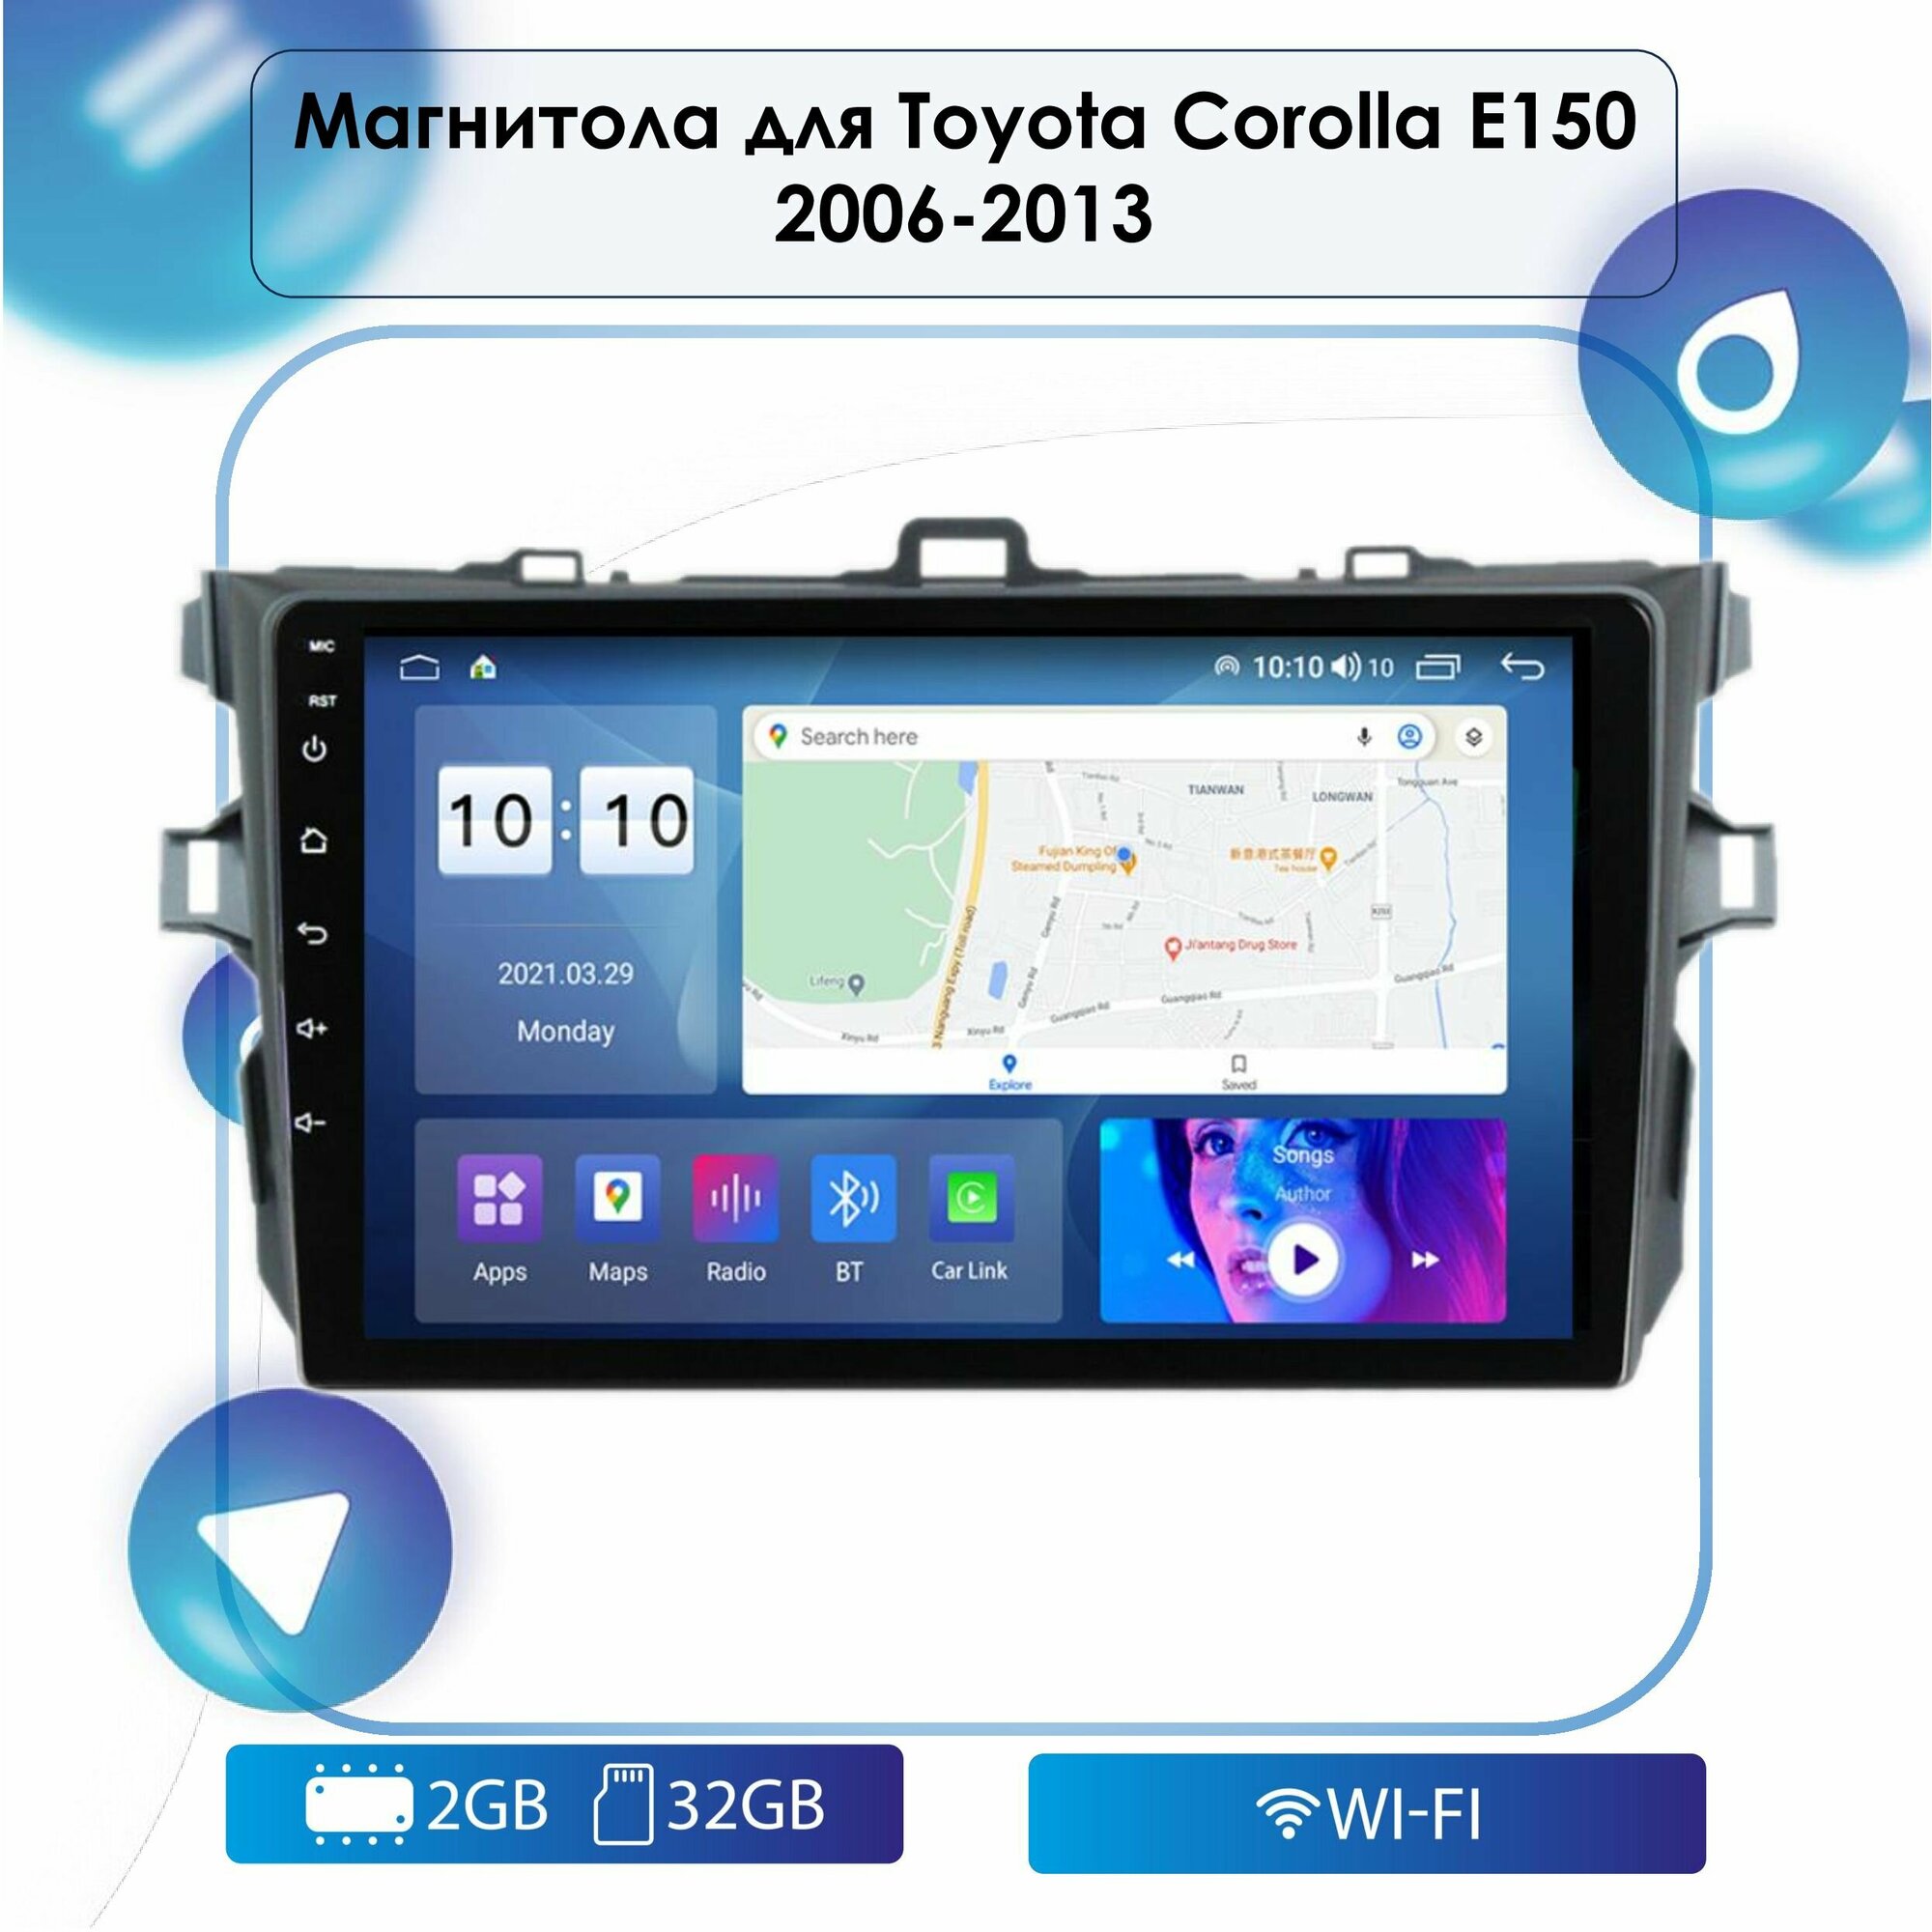 Автомагнитола для Toyota Corolla E150 2006-2013 Android, 2-32 Wi-Fi, Bluetooth, GPS, Эквалайзер, Мульти-руль